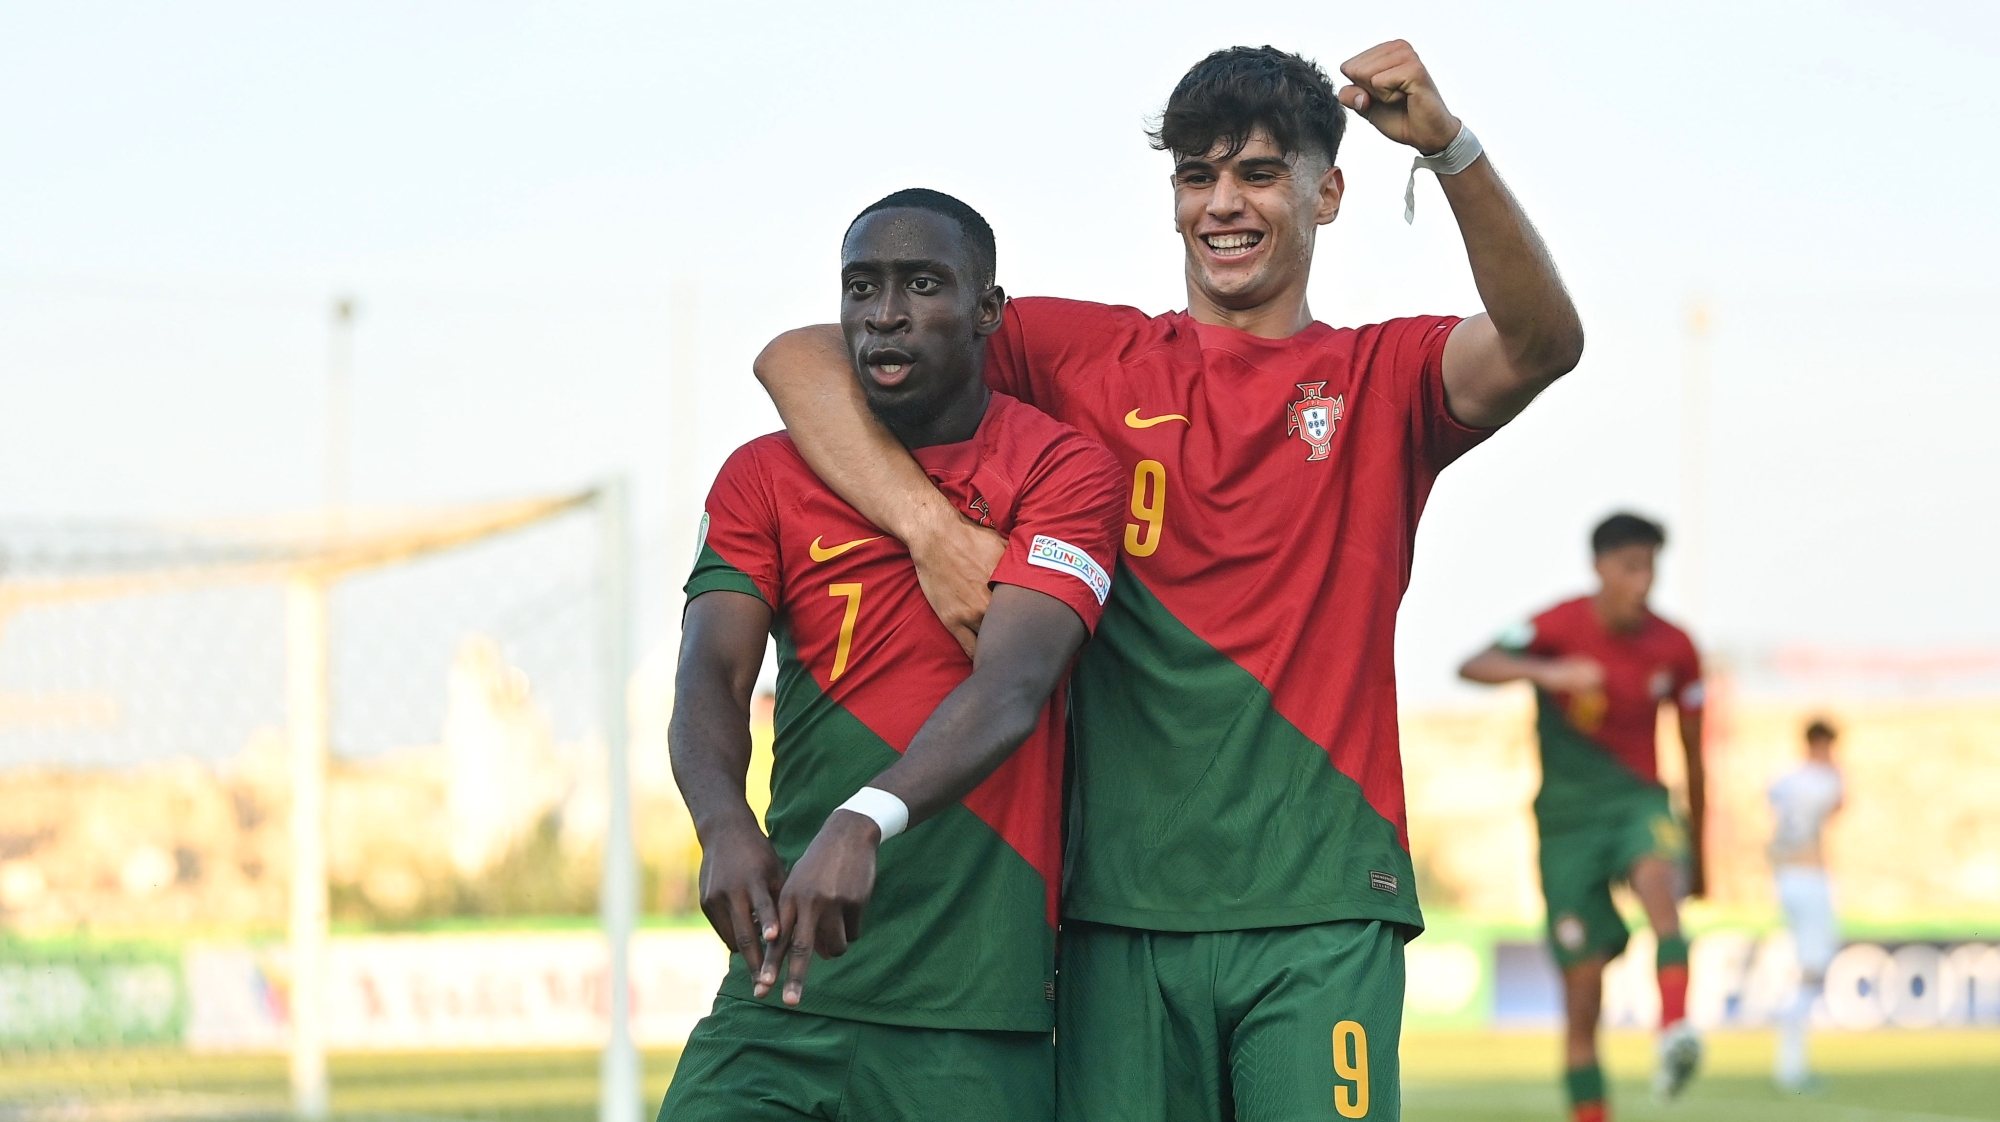 Sub-19: Portugal goleia Kosovo